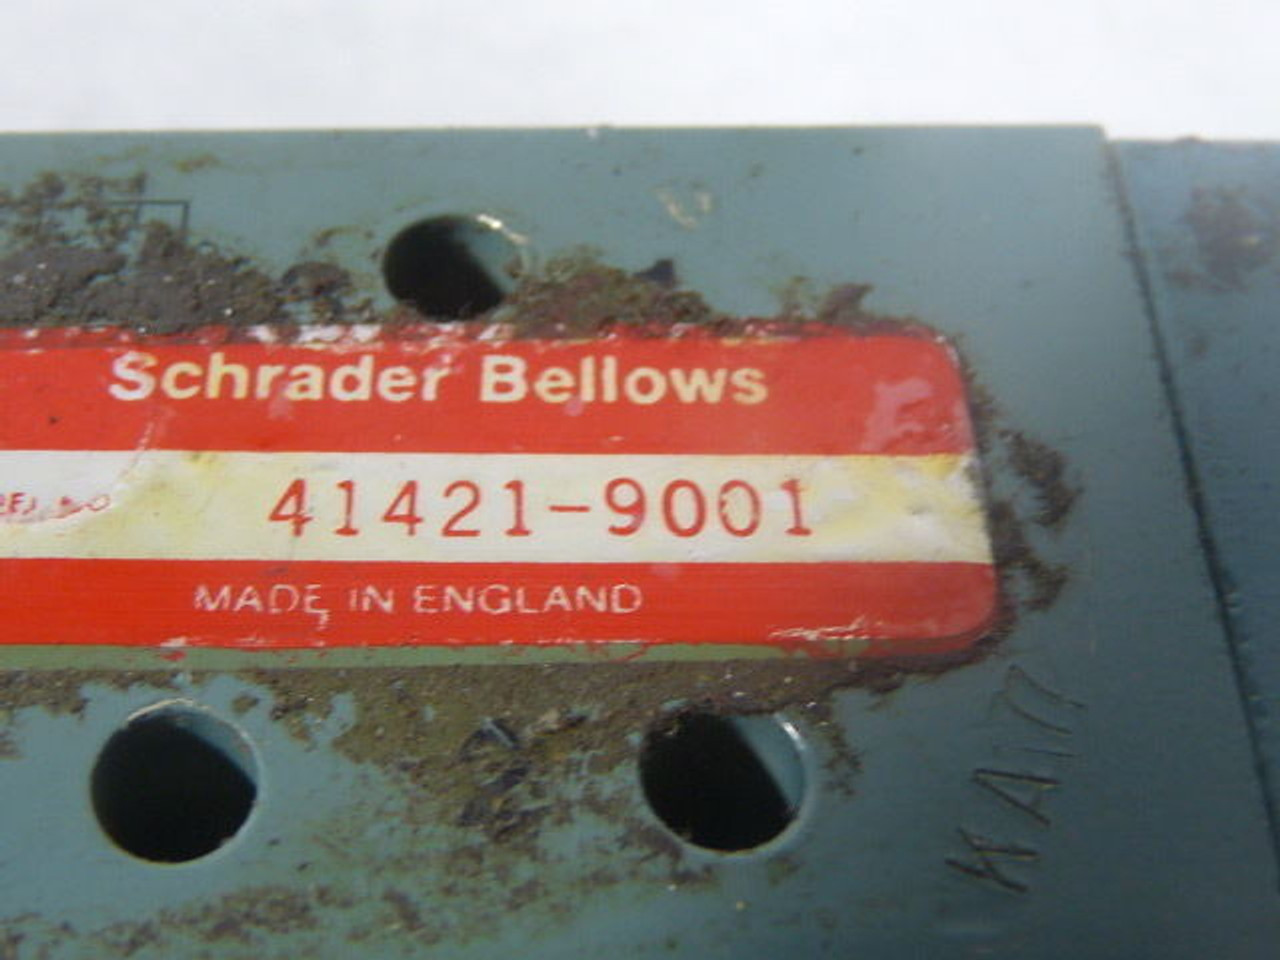 Schrader Bellows 41421-9001 Pneumatic Valve USED